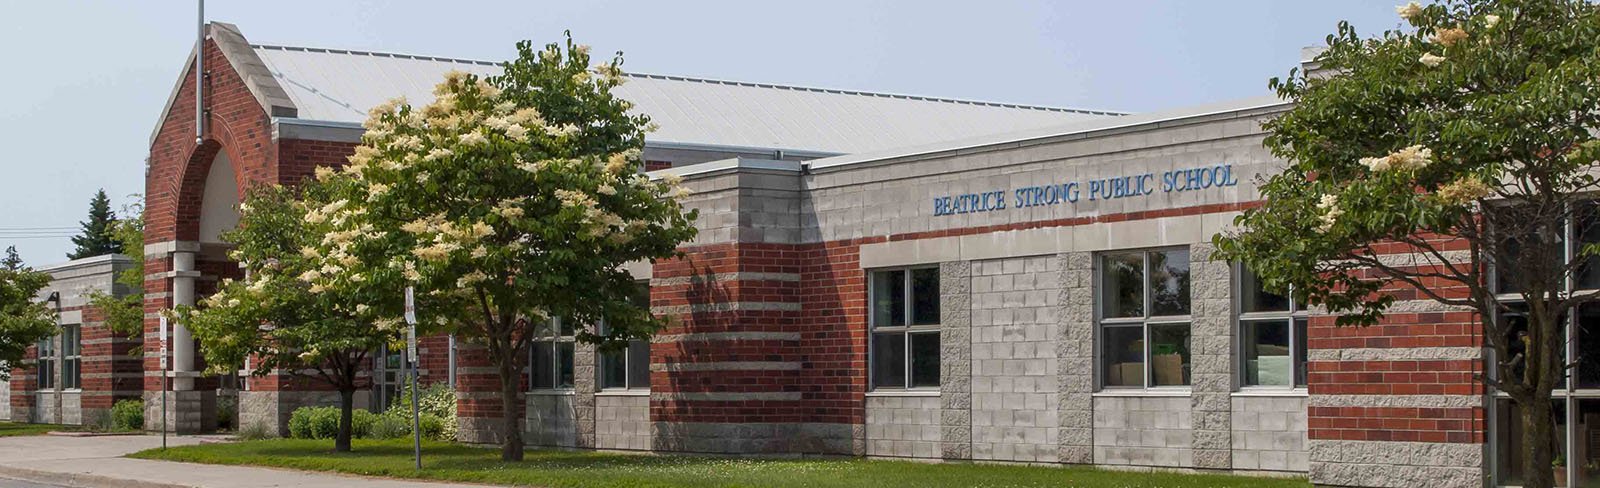 Beatrice Strong Public School